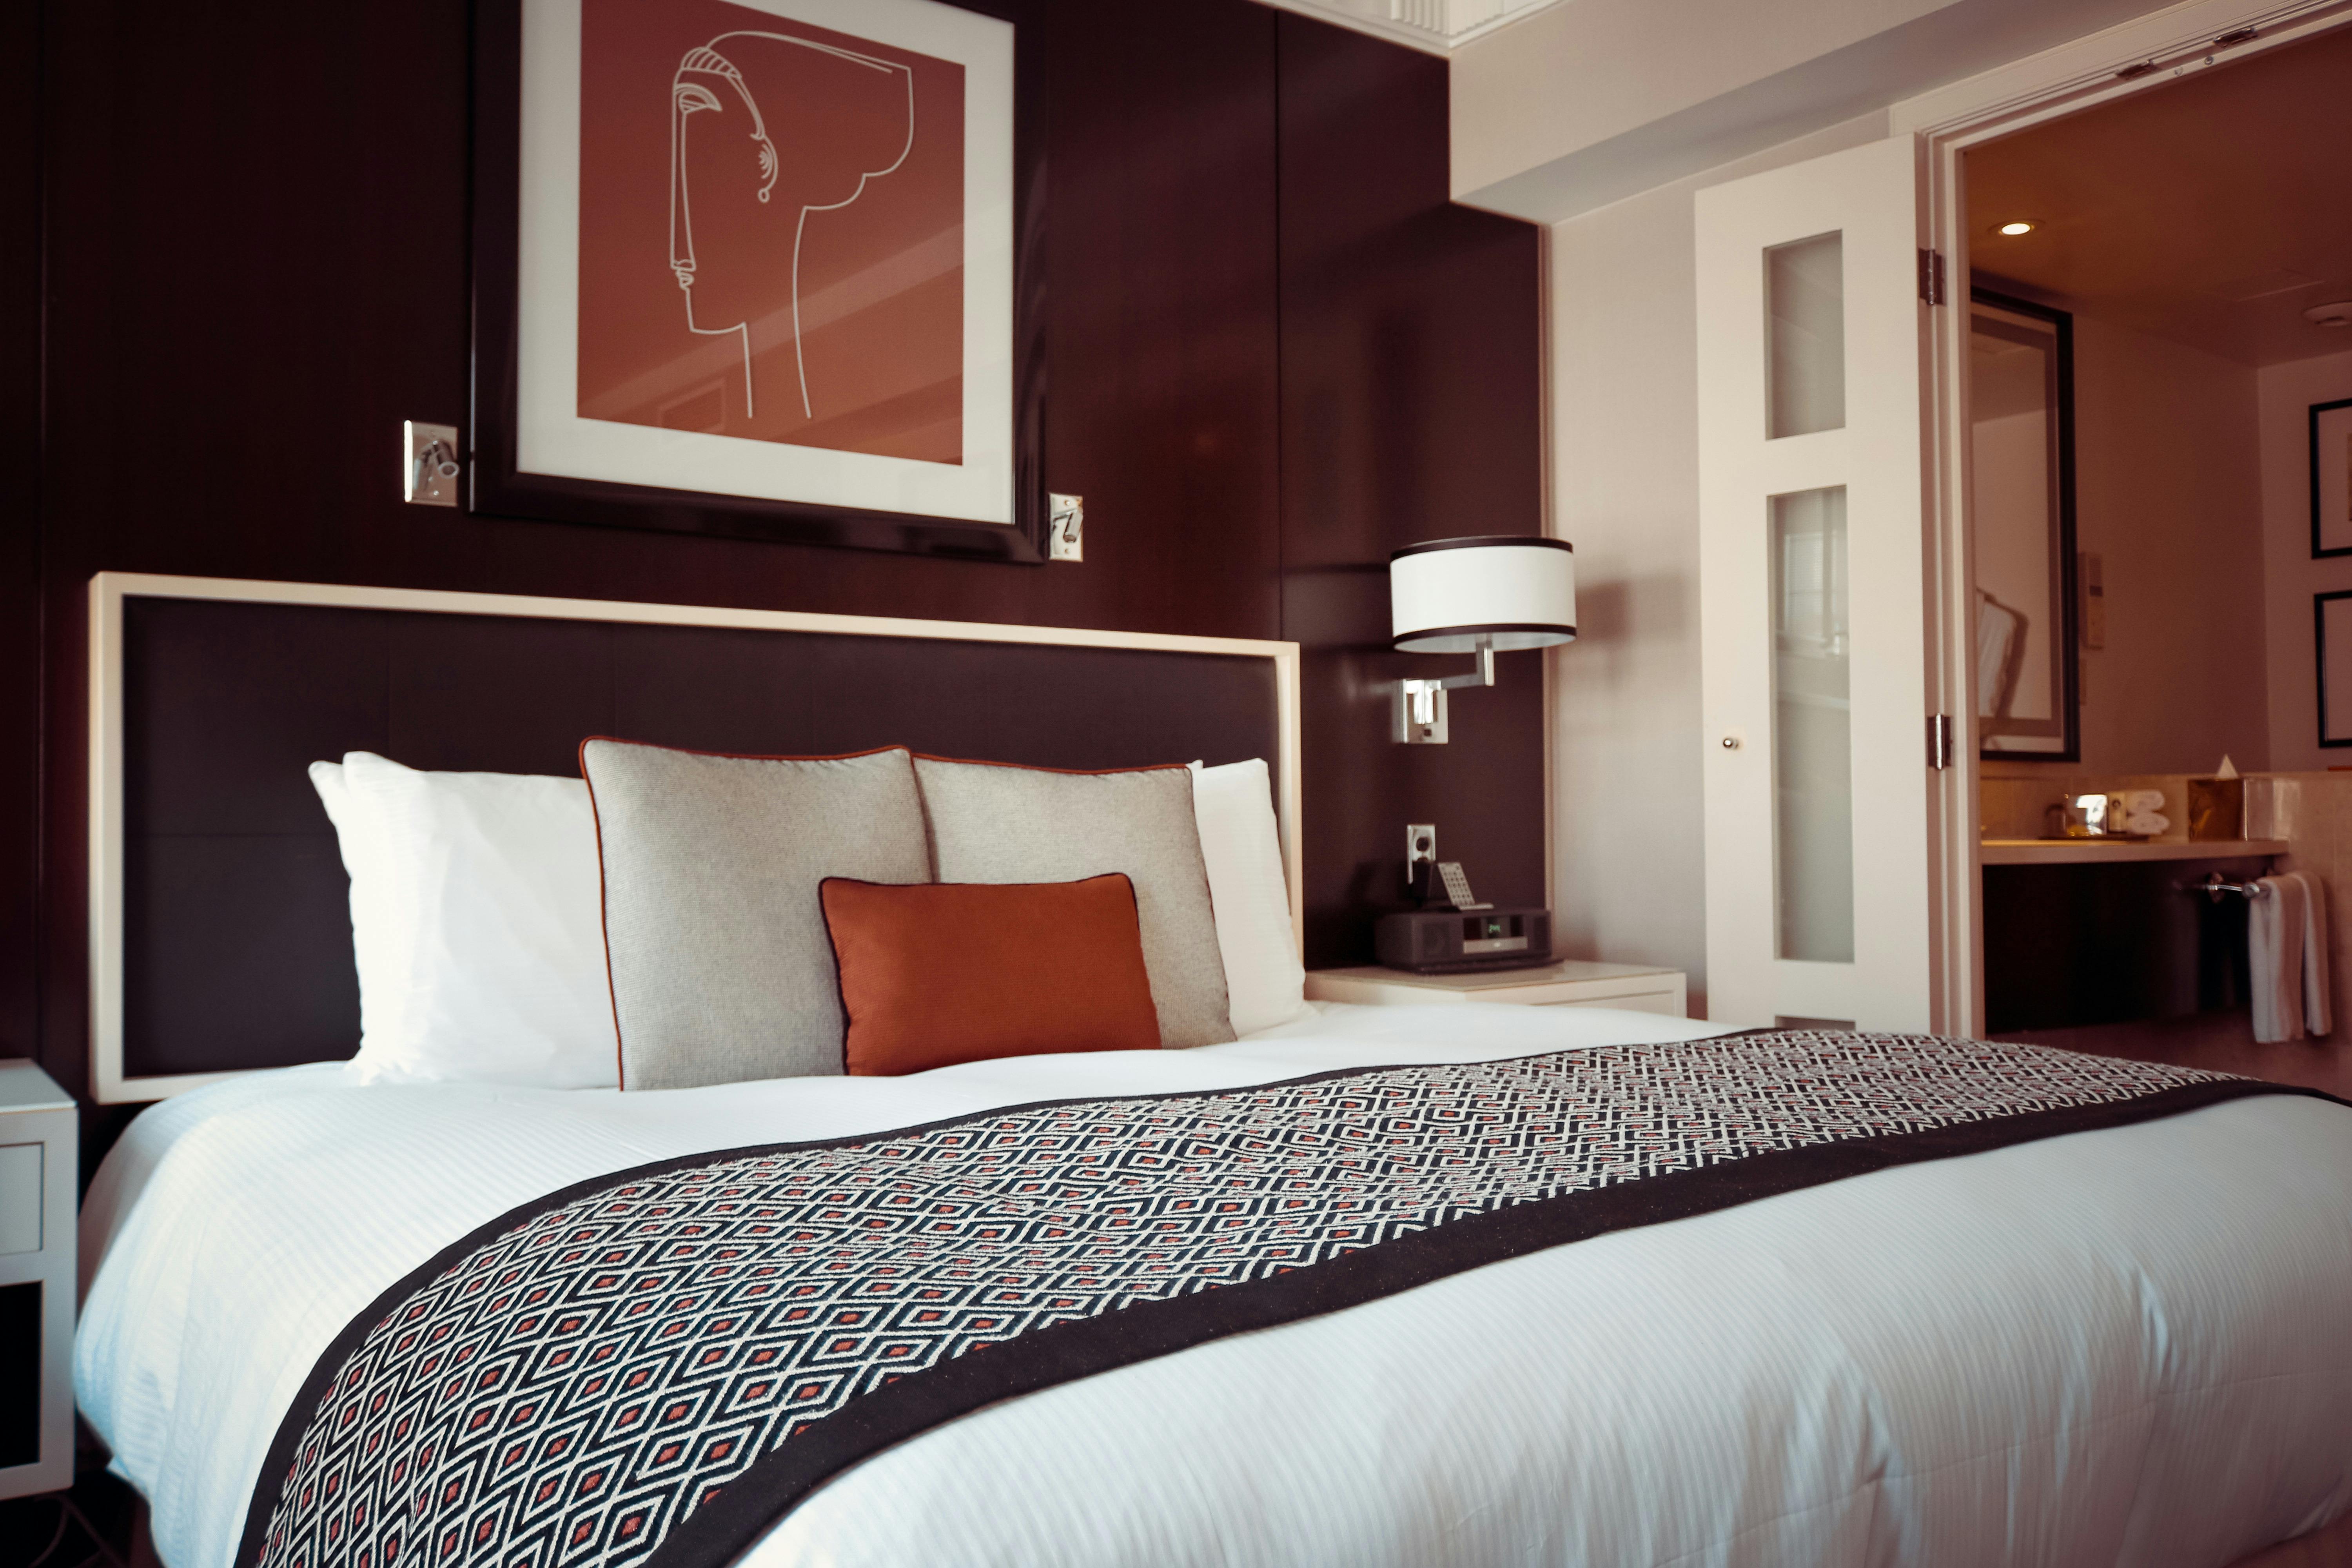 Avoiding Bed Bugs in Hotels: A Traveler